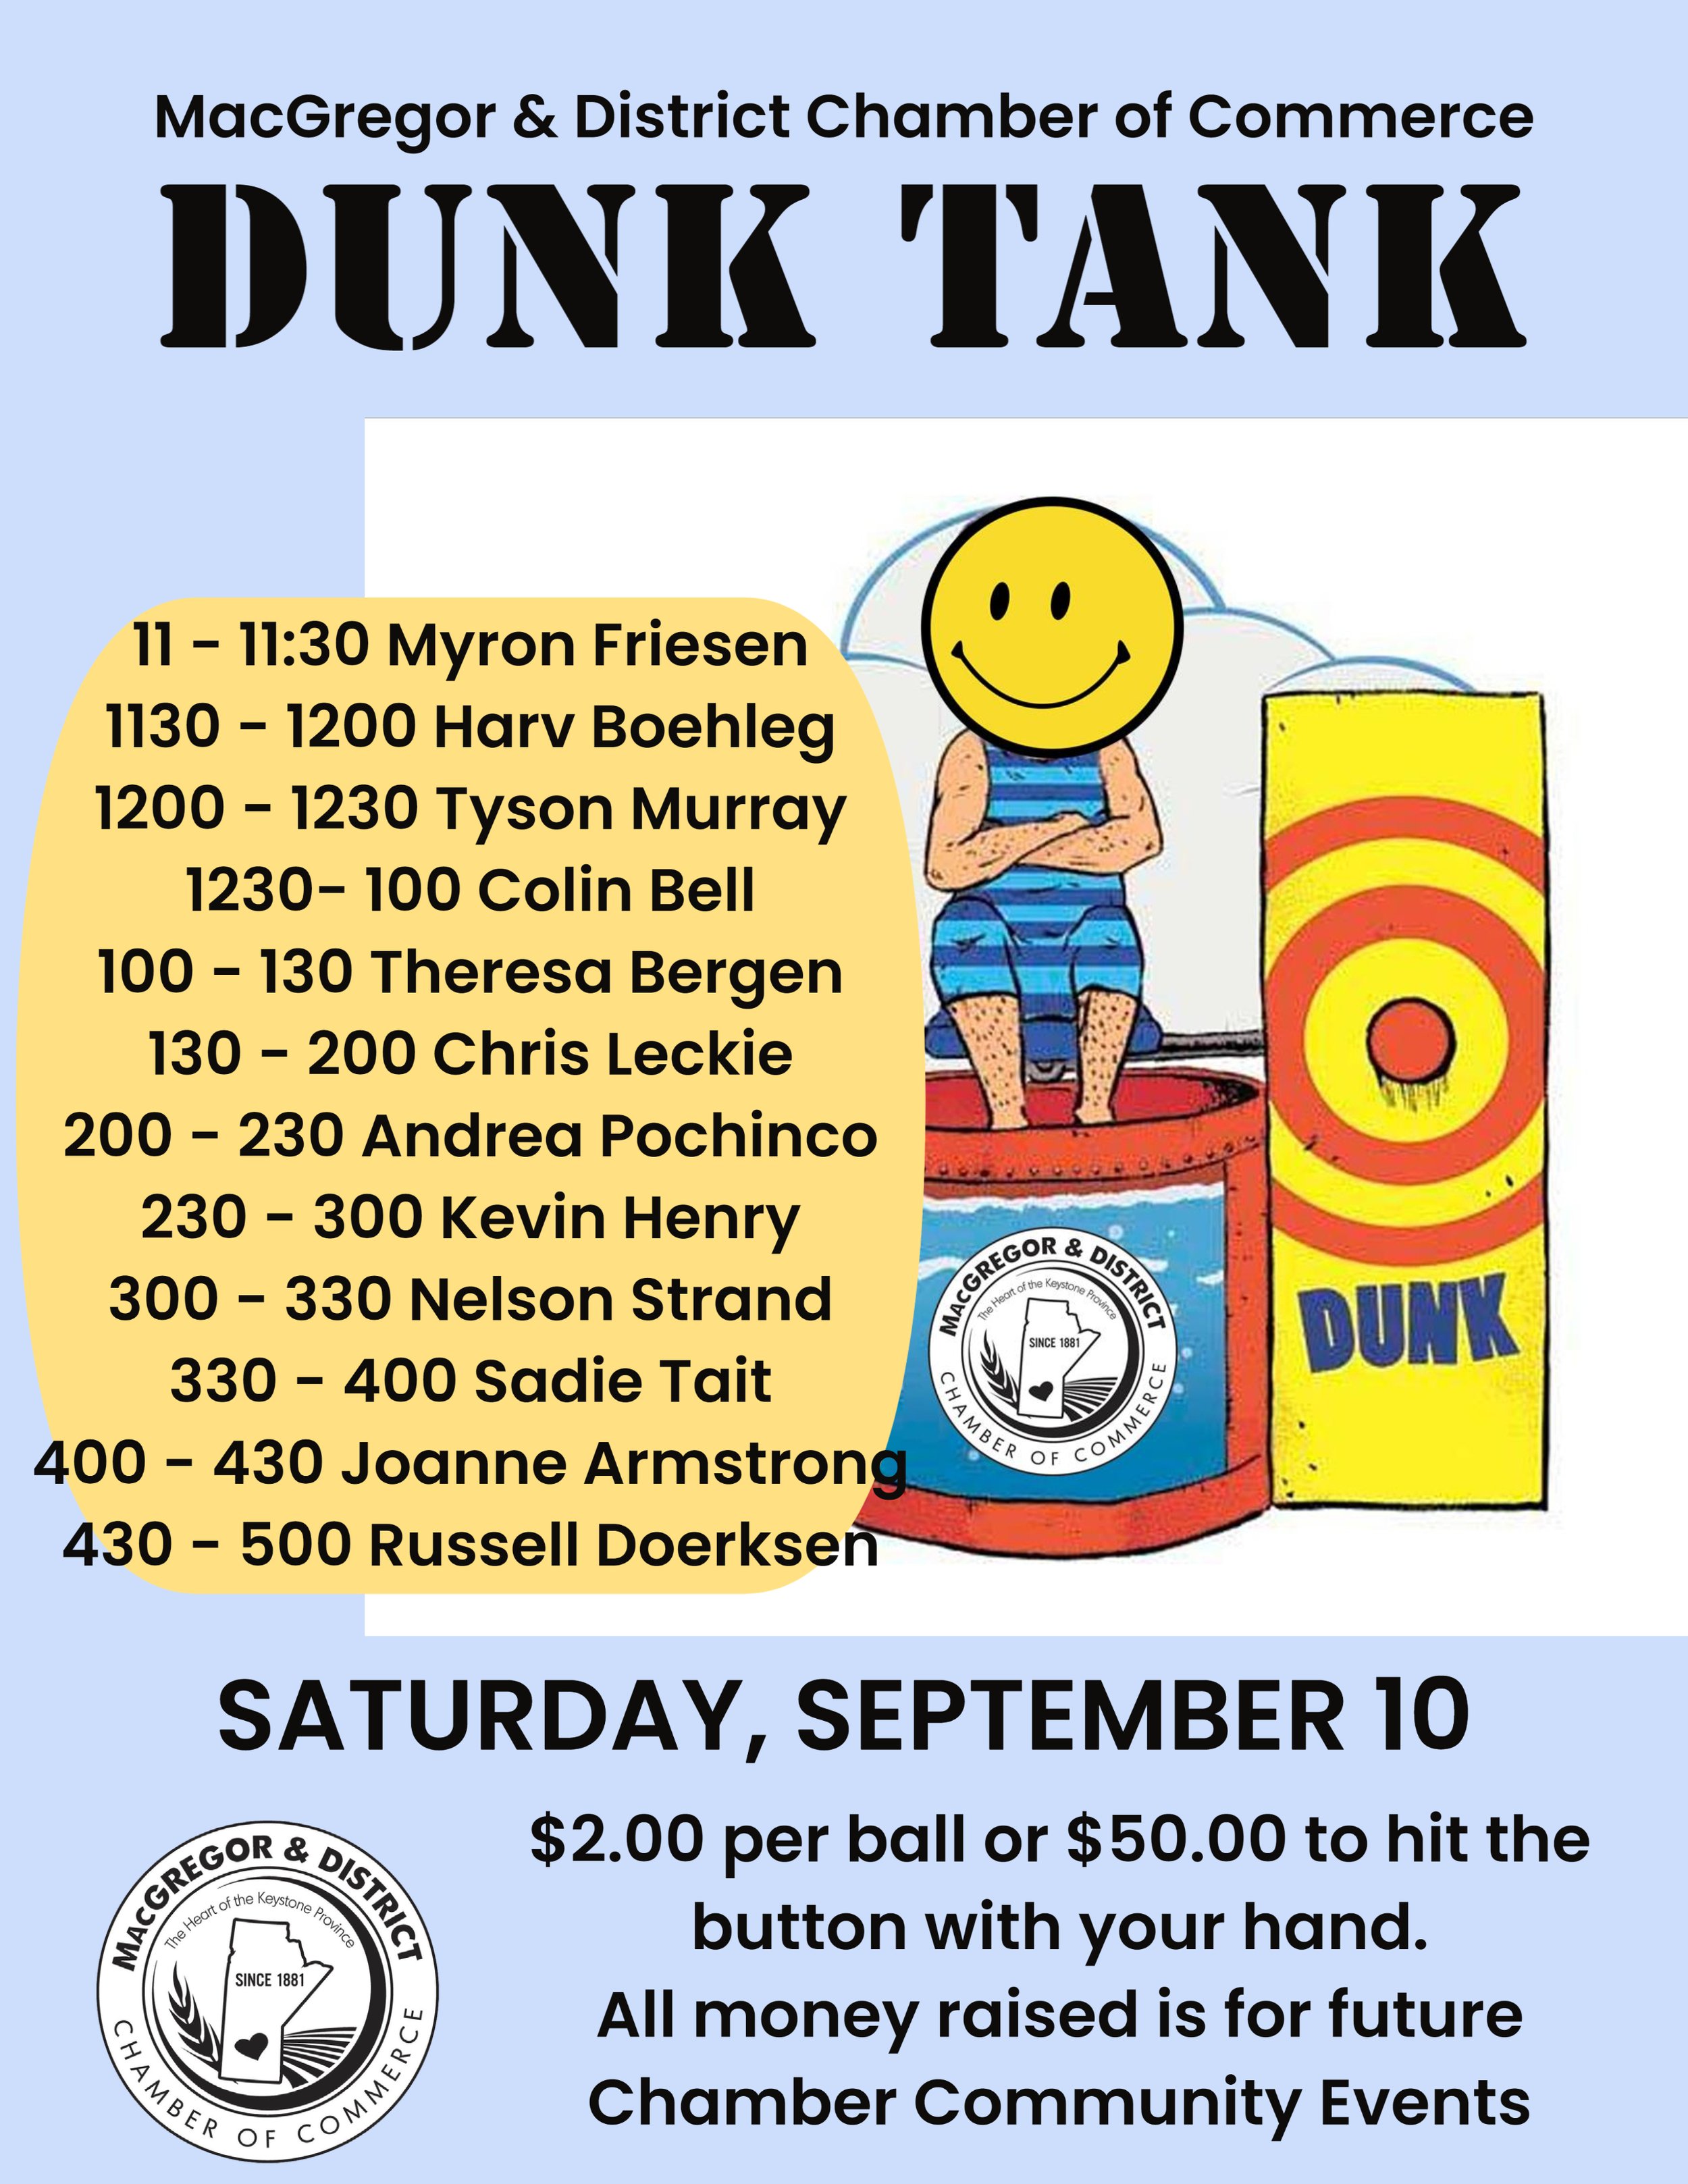 Dunk tank people-1 (1).jpg